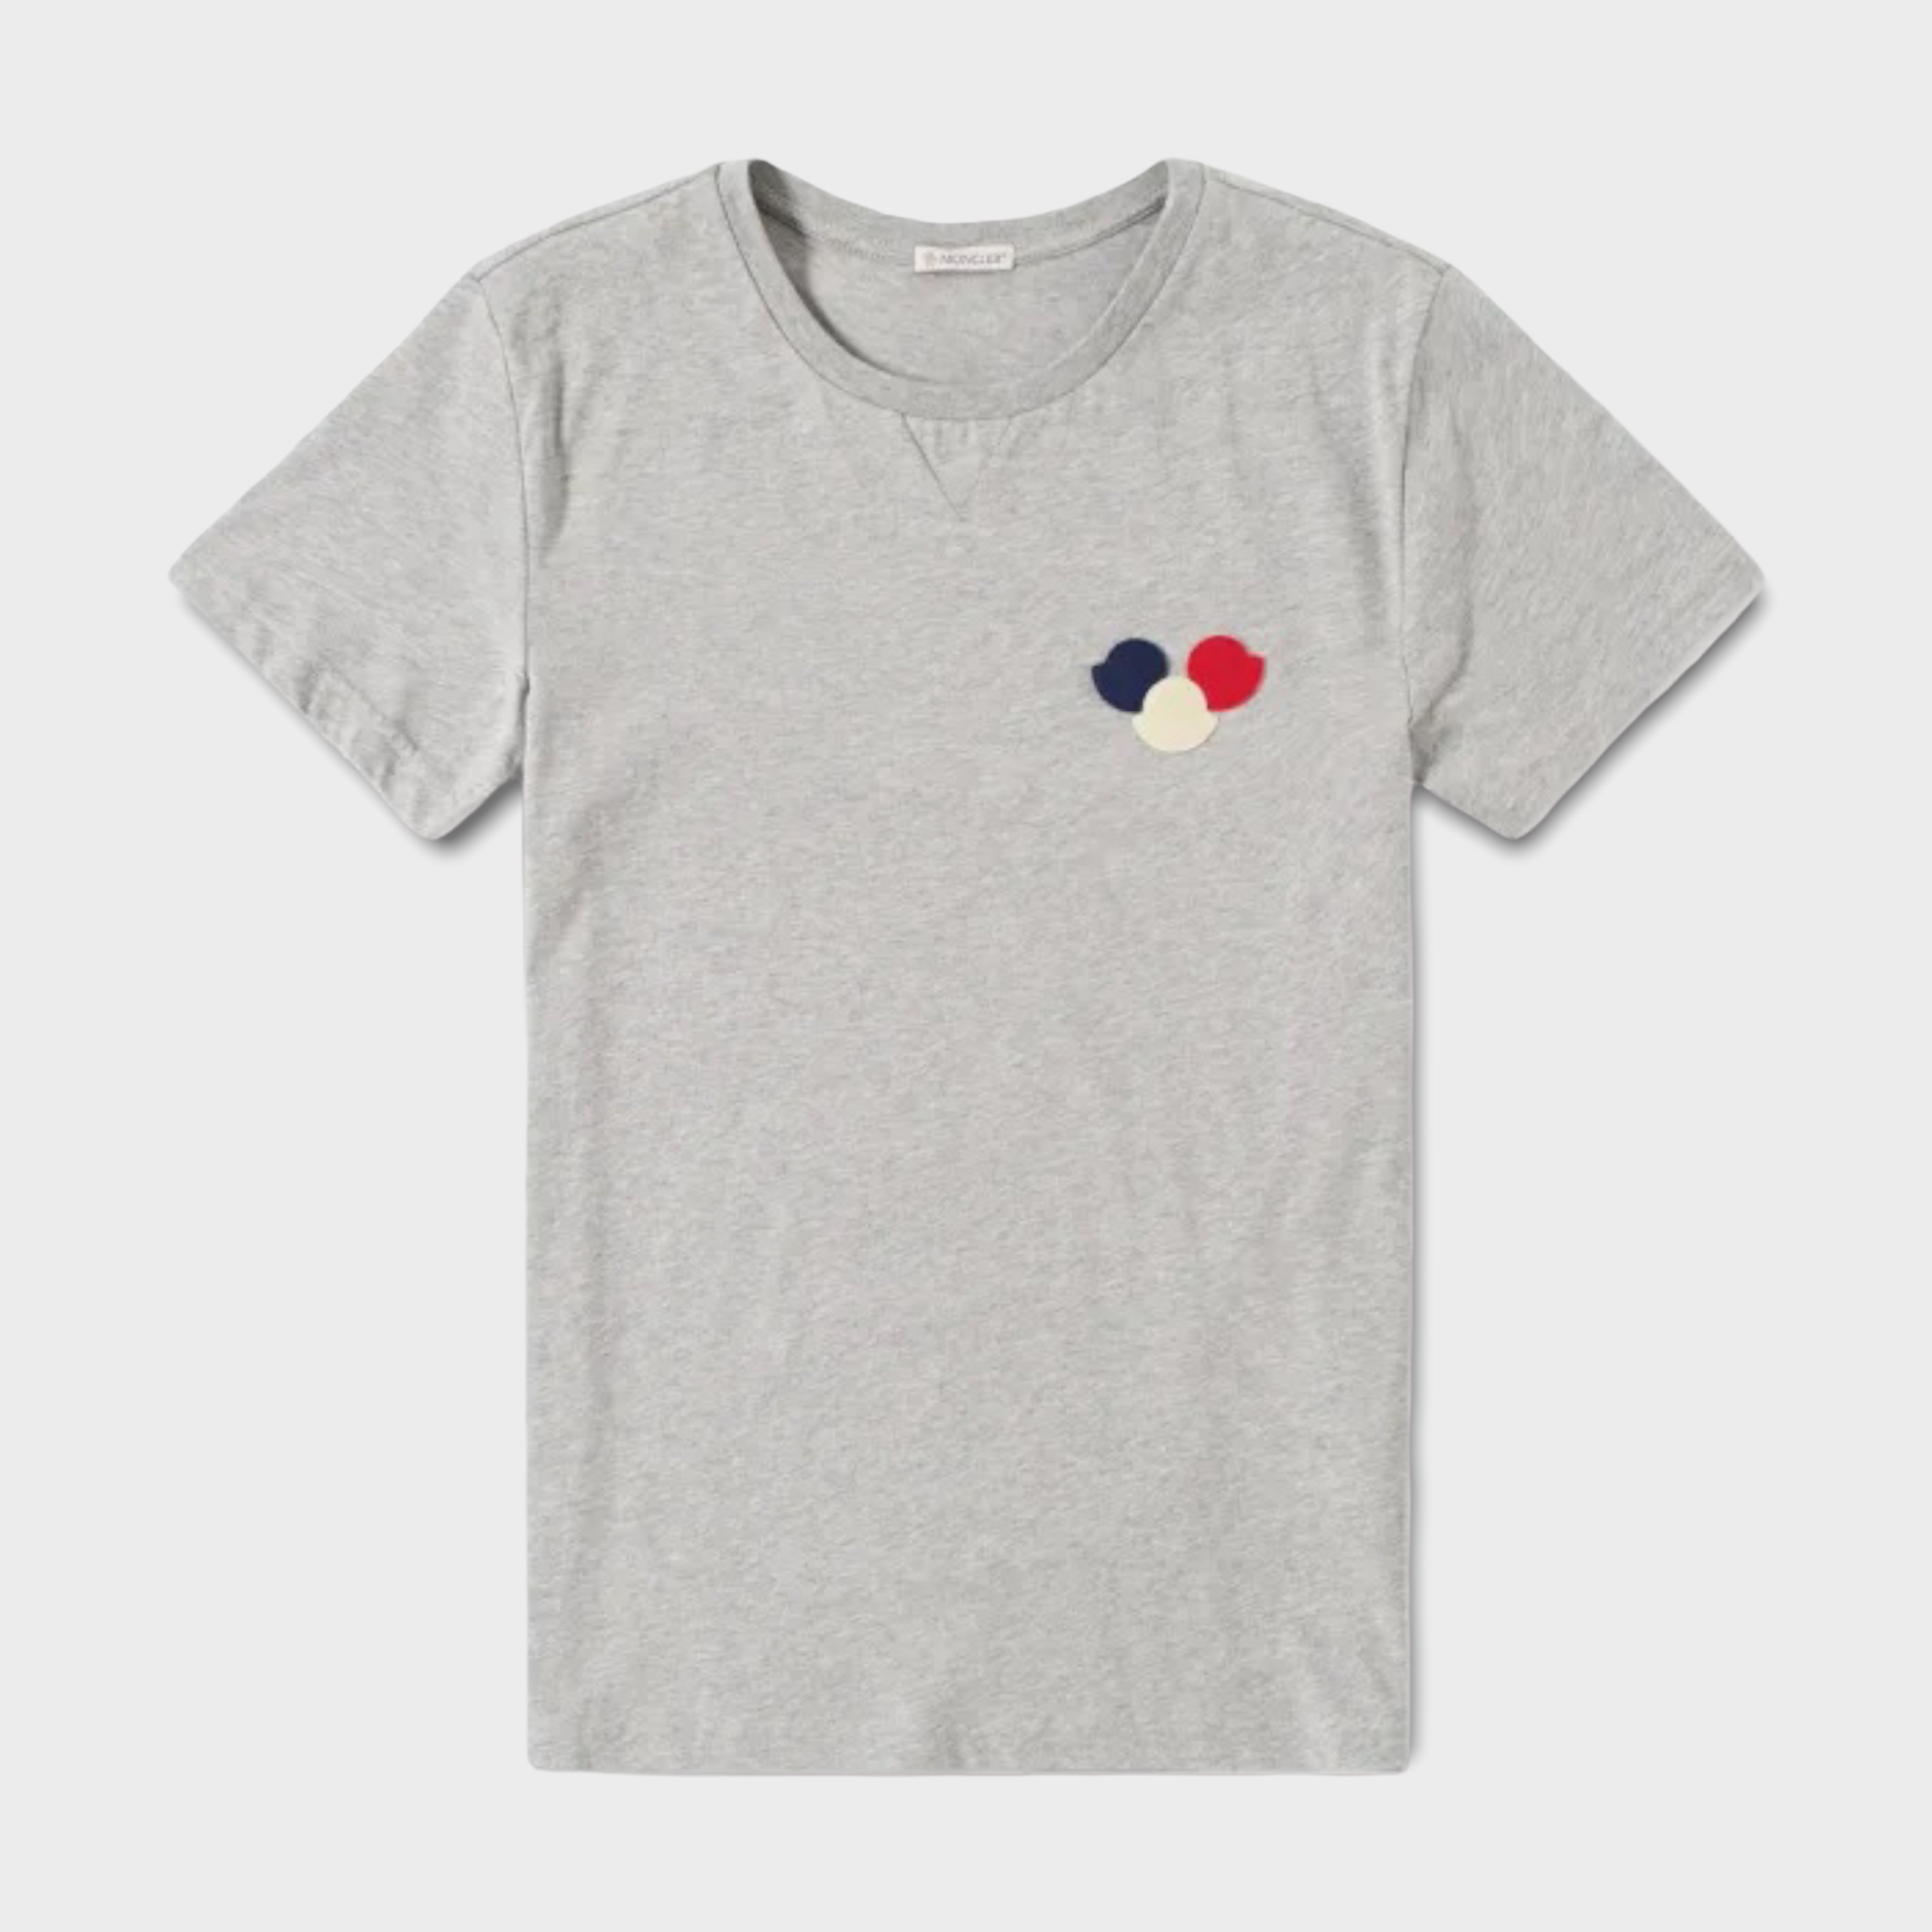 Moncler Triple Logo T-Shirt - Size M (Fits S)